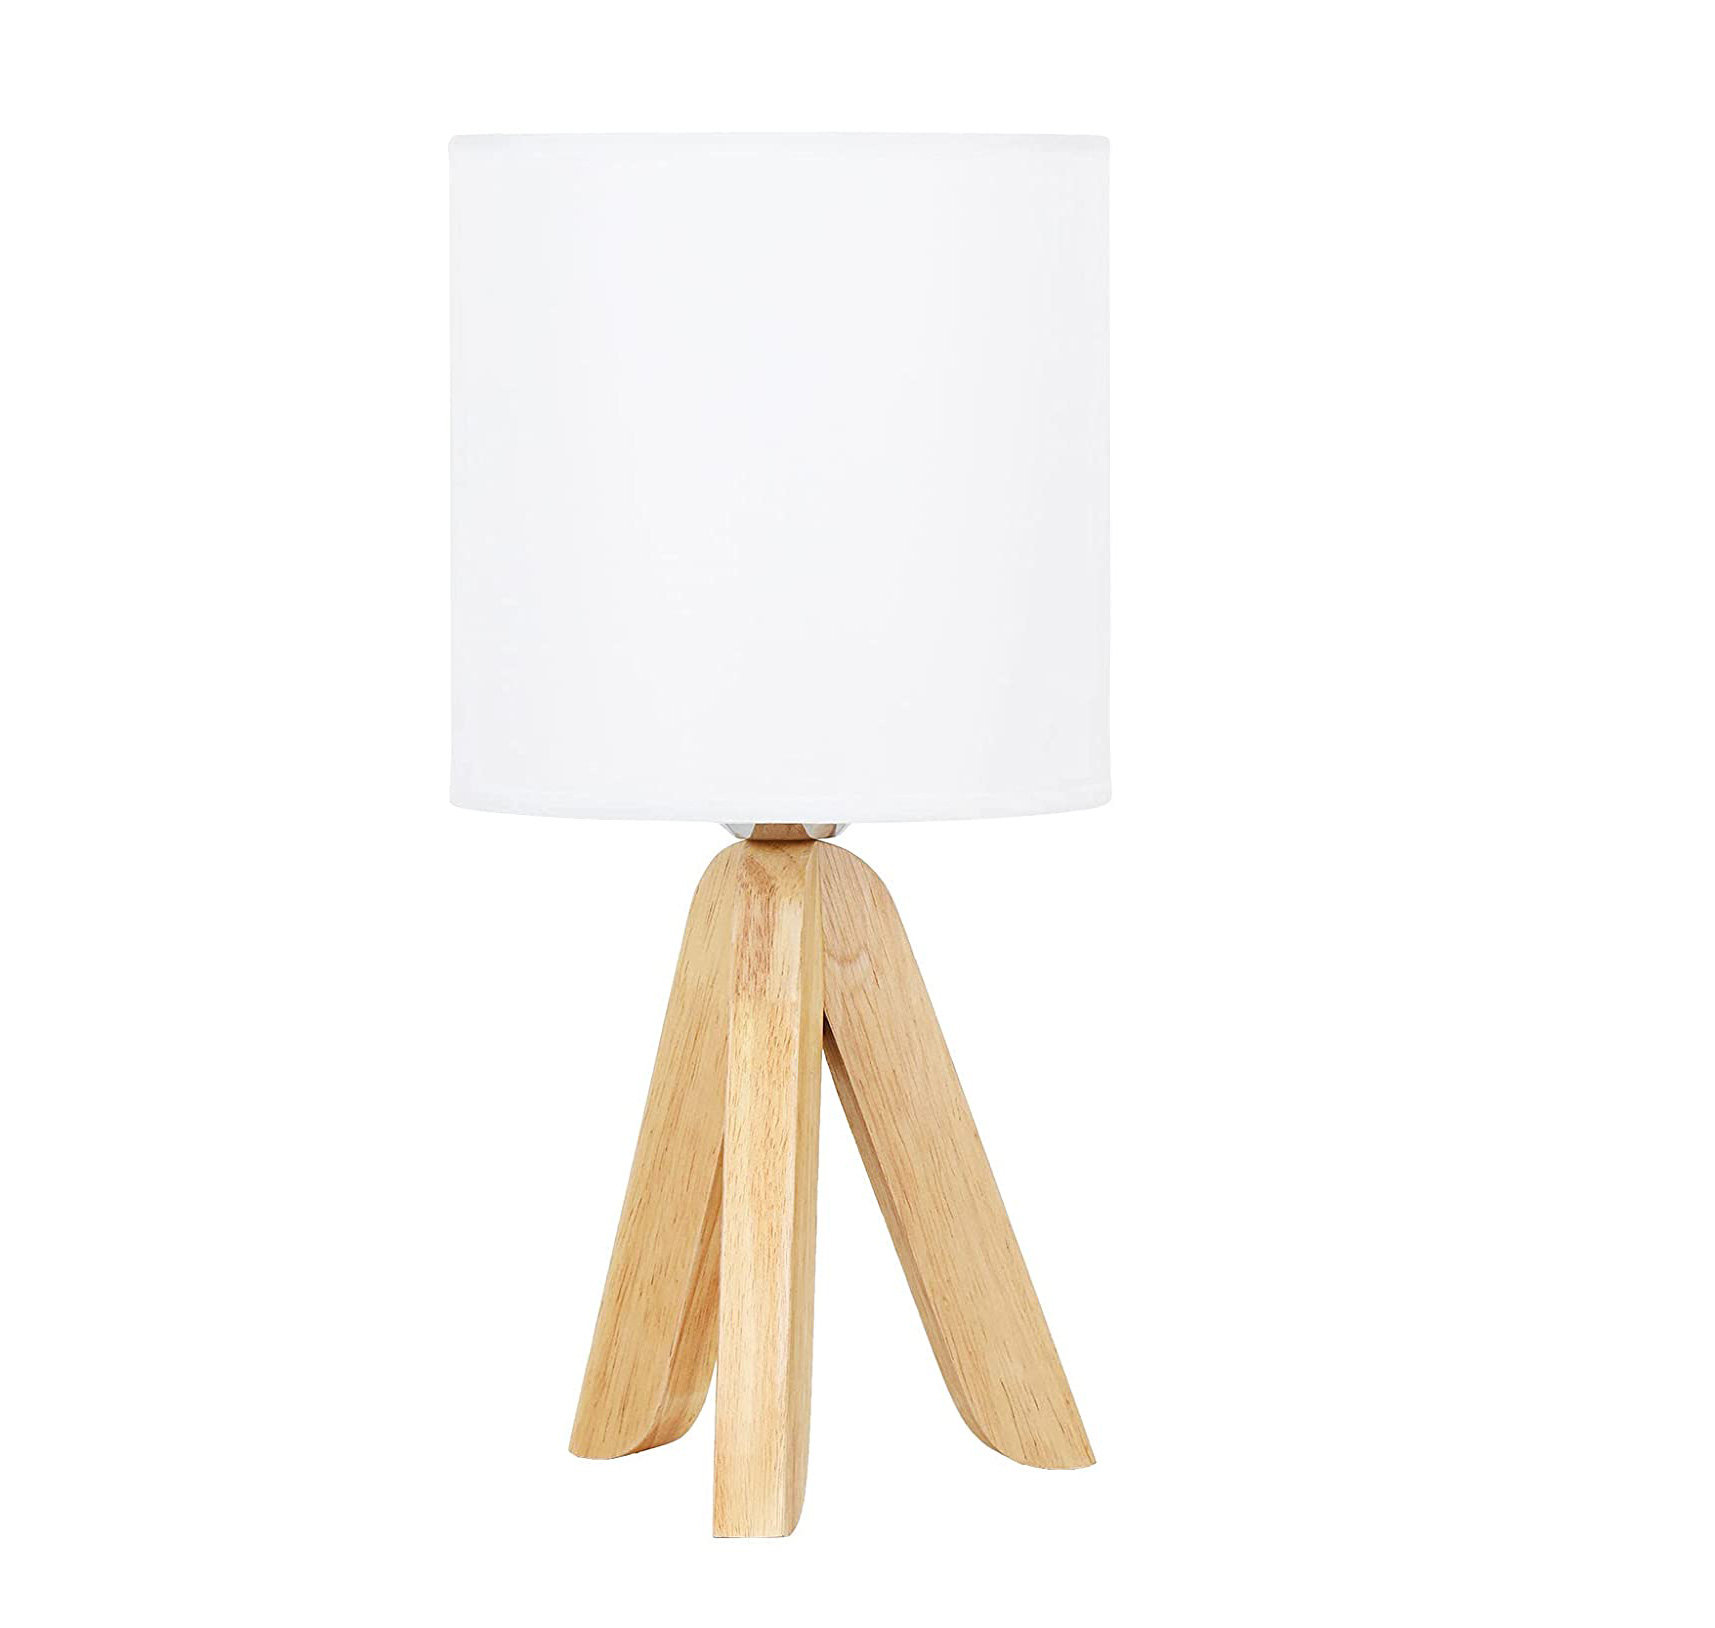 Wood Fabric Desk Lamp Fixtures, Wood Fabric Table Lights